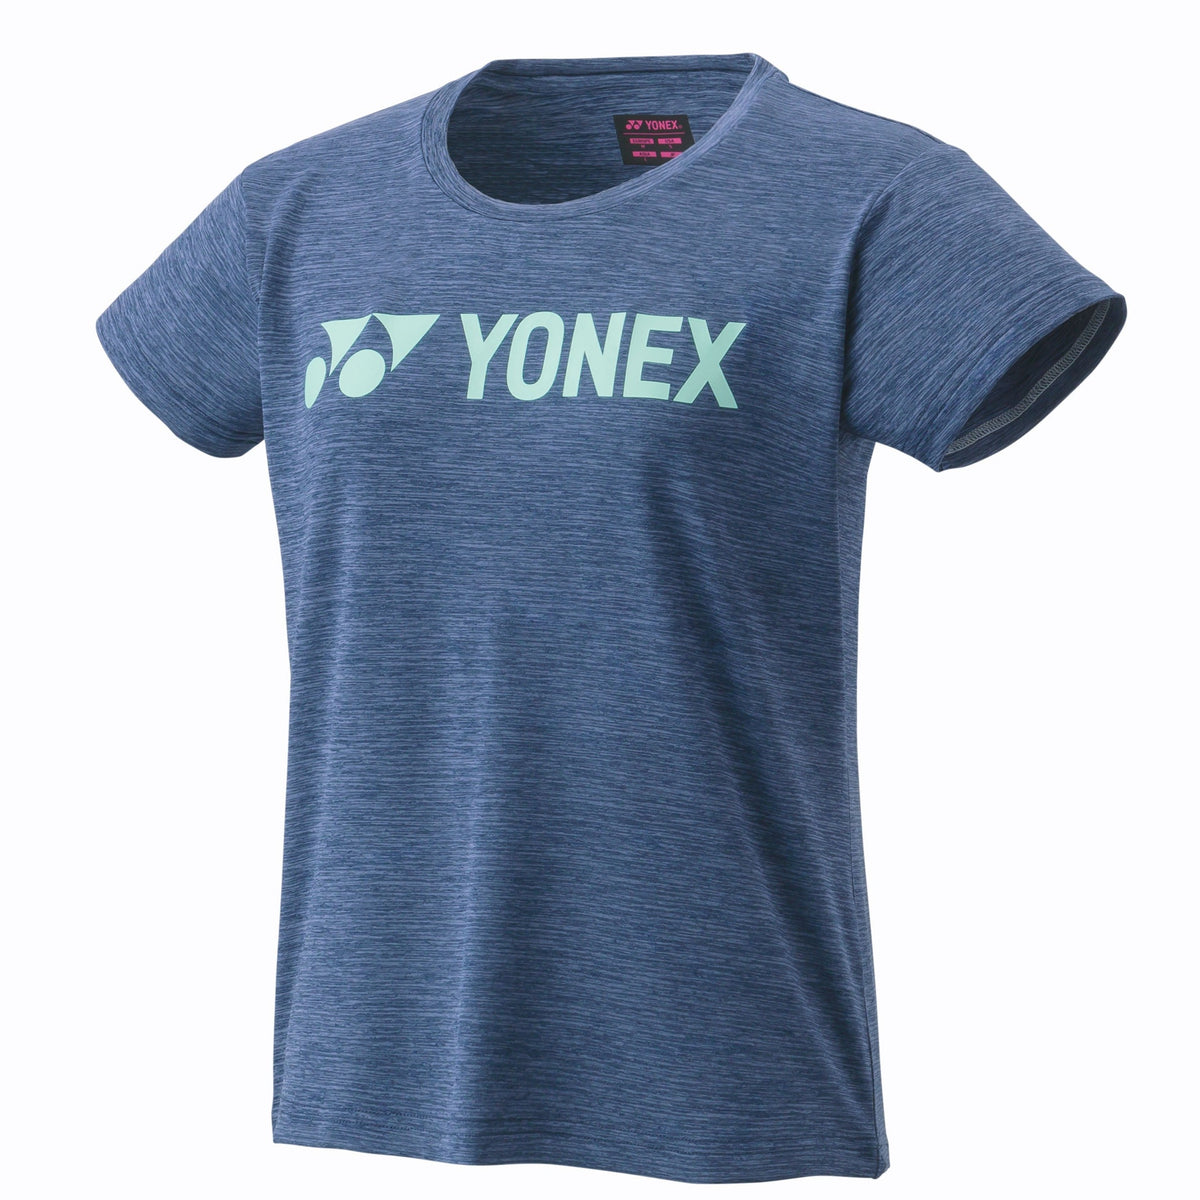 Yonex Unisex Shirt indigo marine